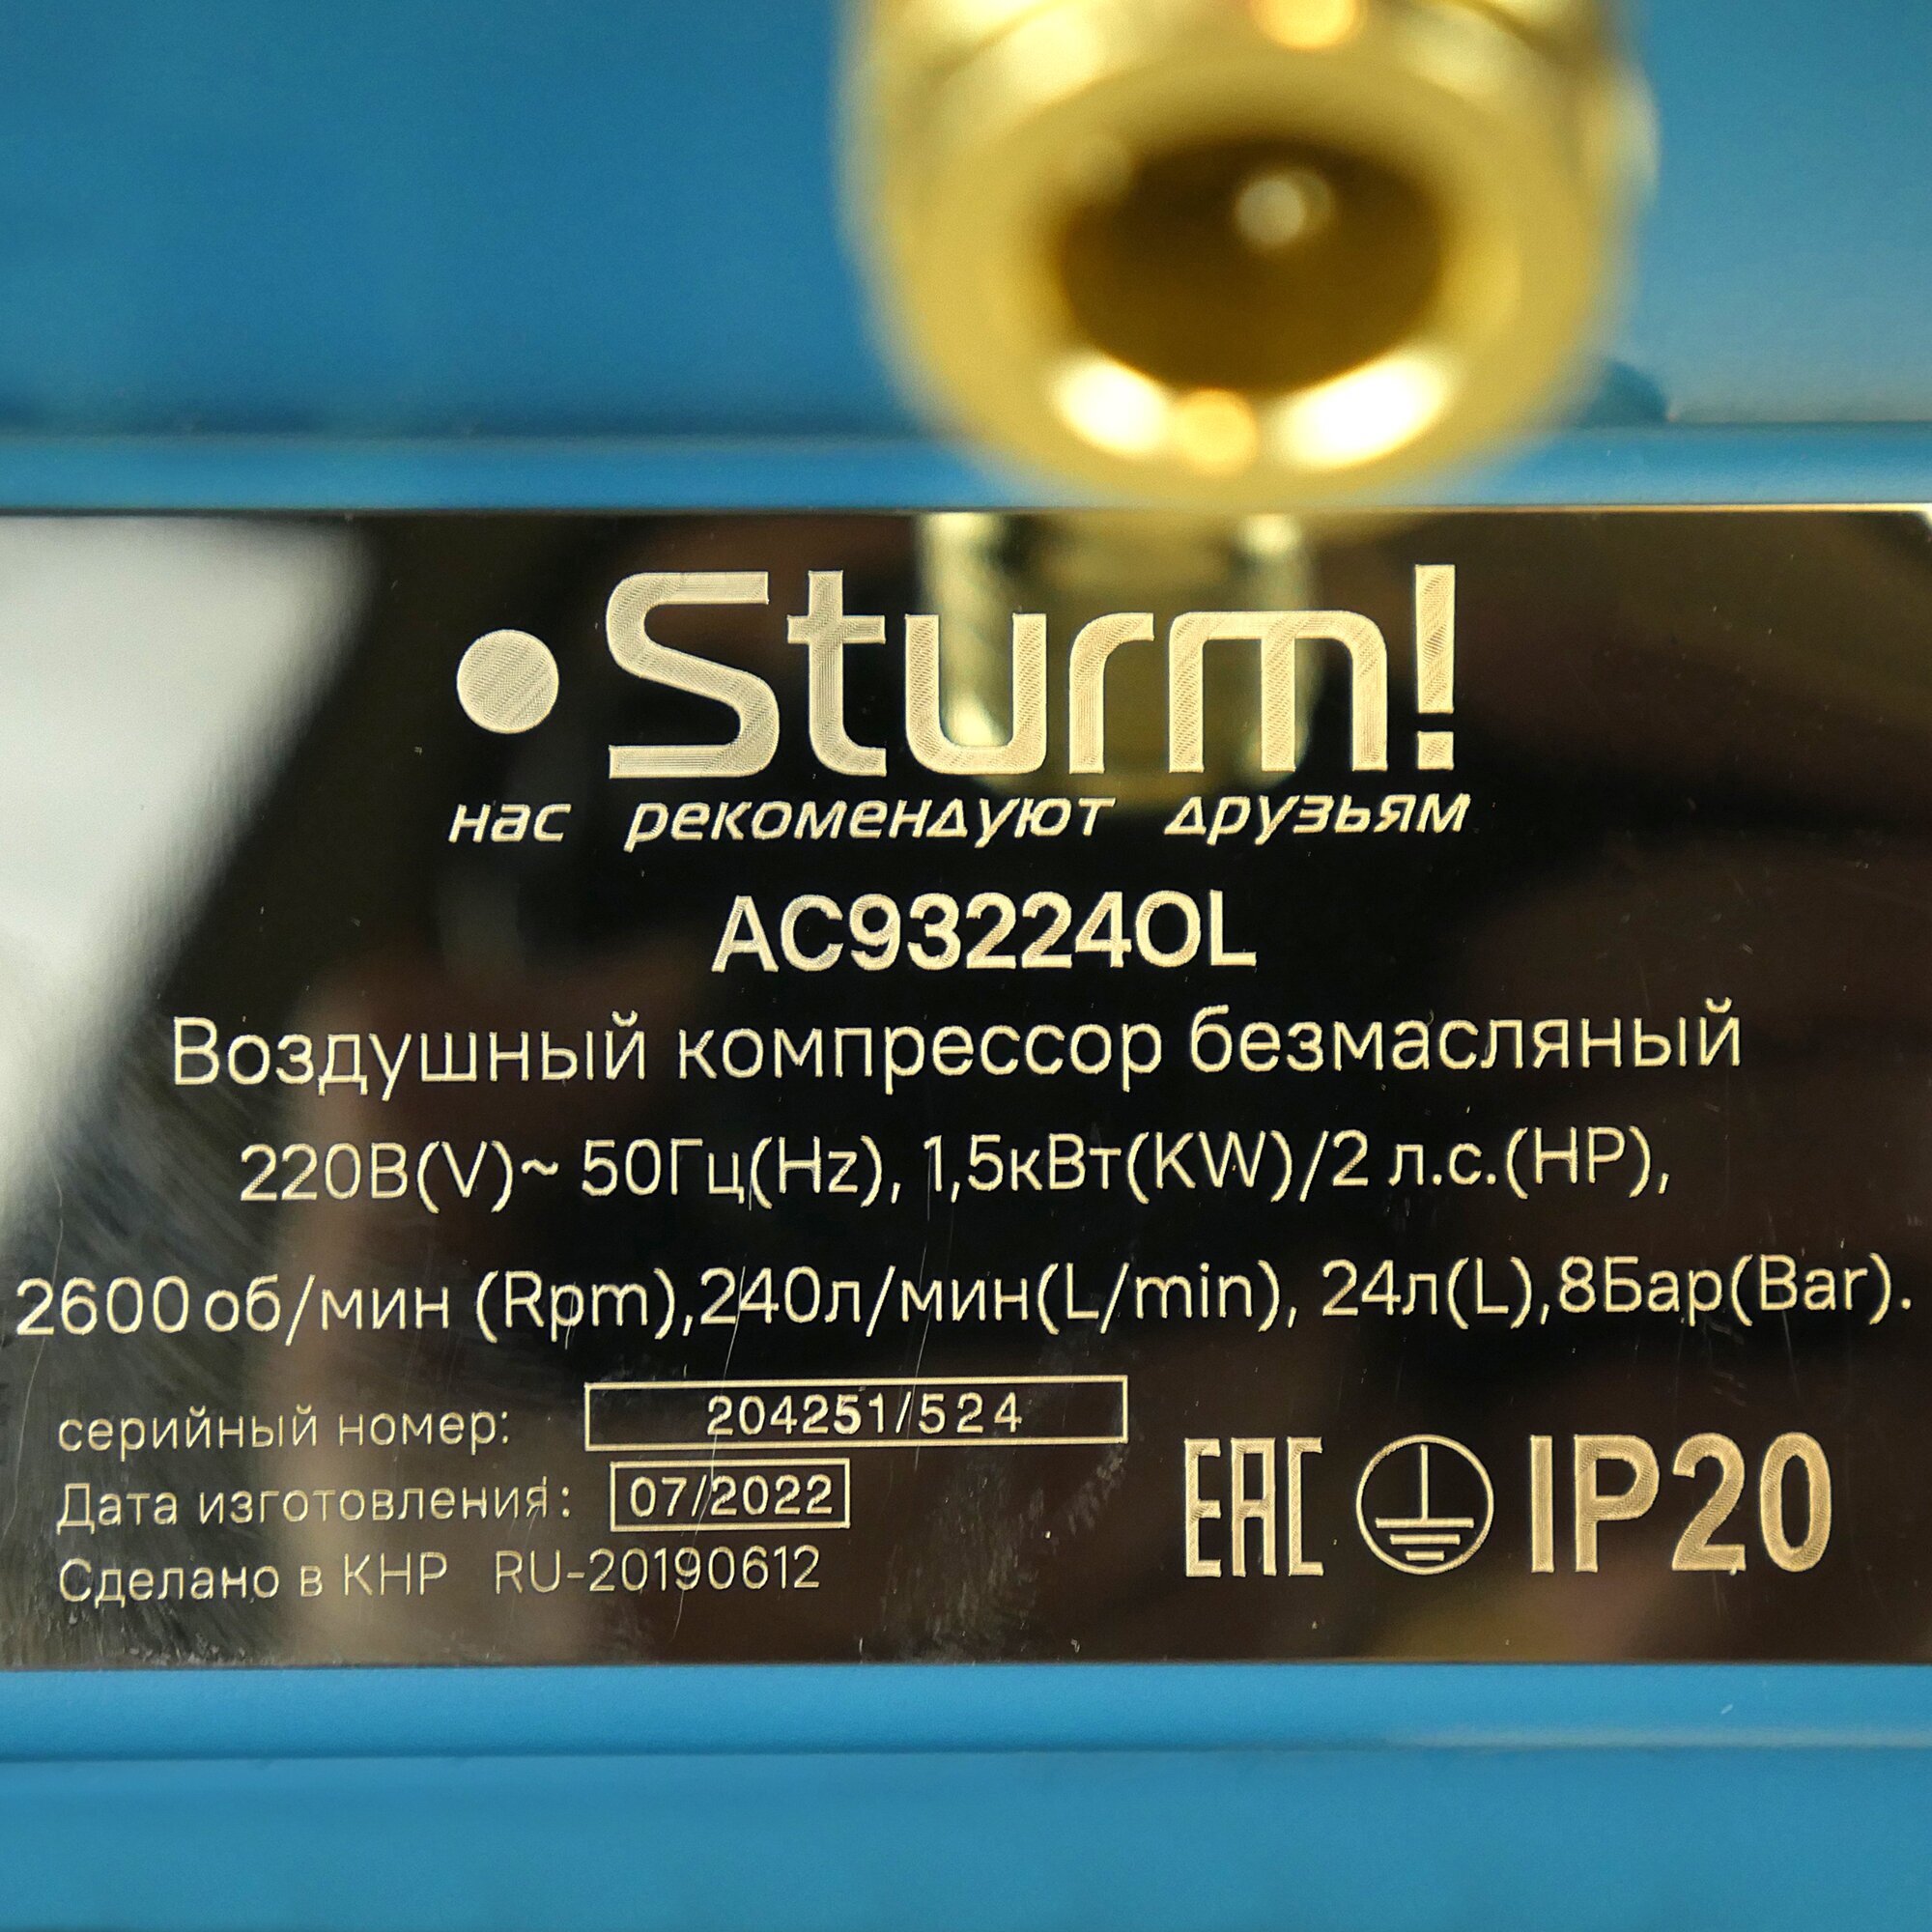 Компрессор безмасляный Sturm! AC93224OL 24 л 15 кВт